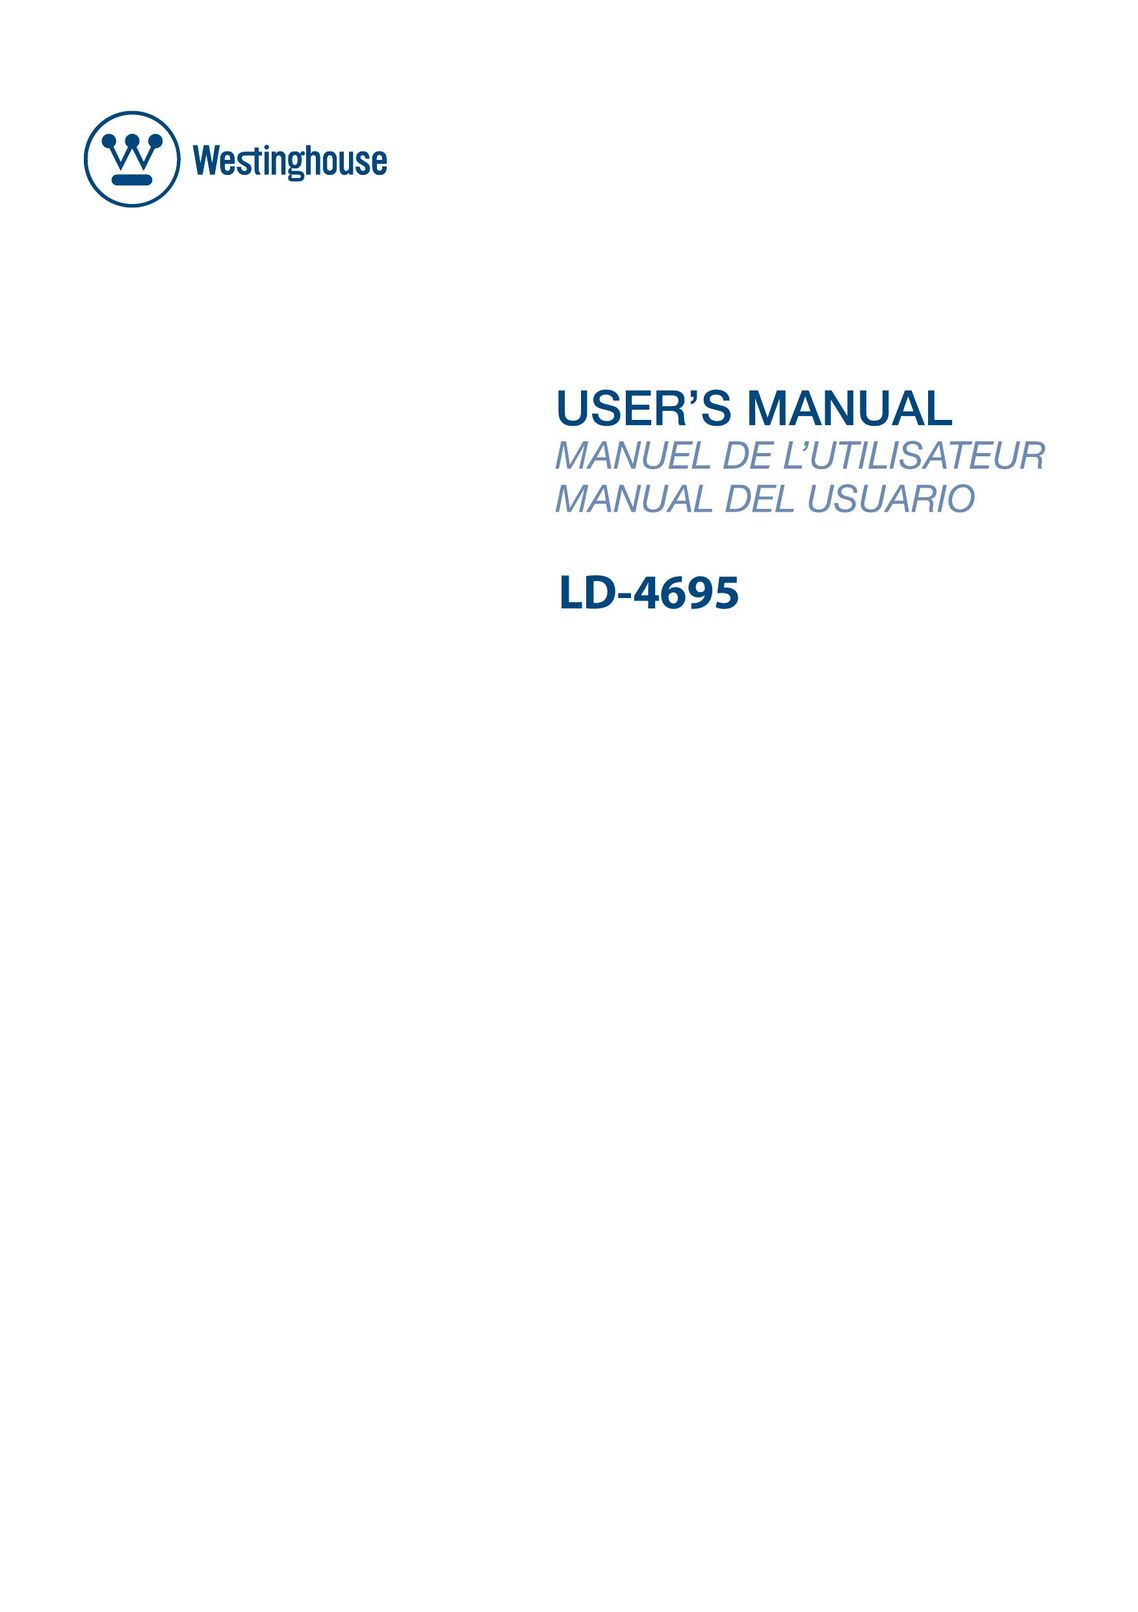 Westinghouse LD-4695 Model Vehicle User Manual